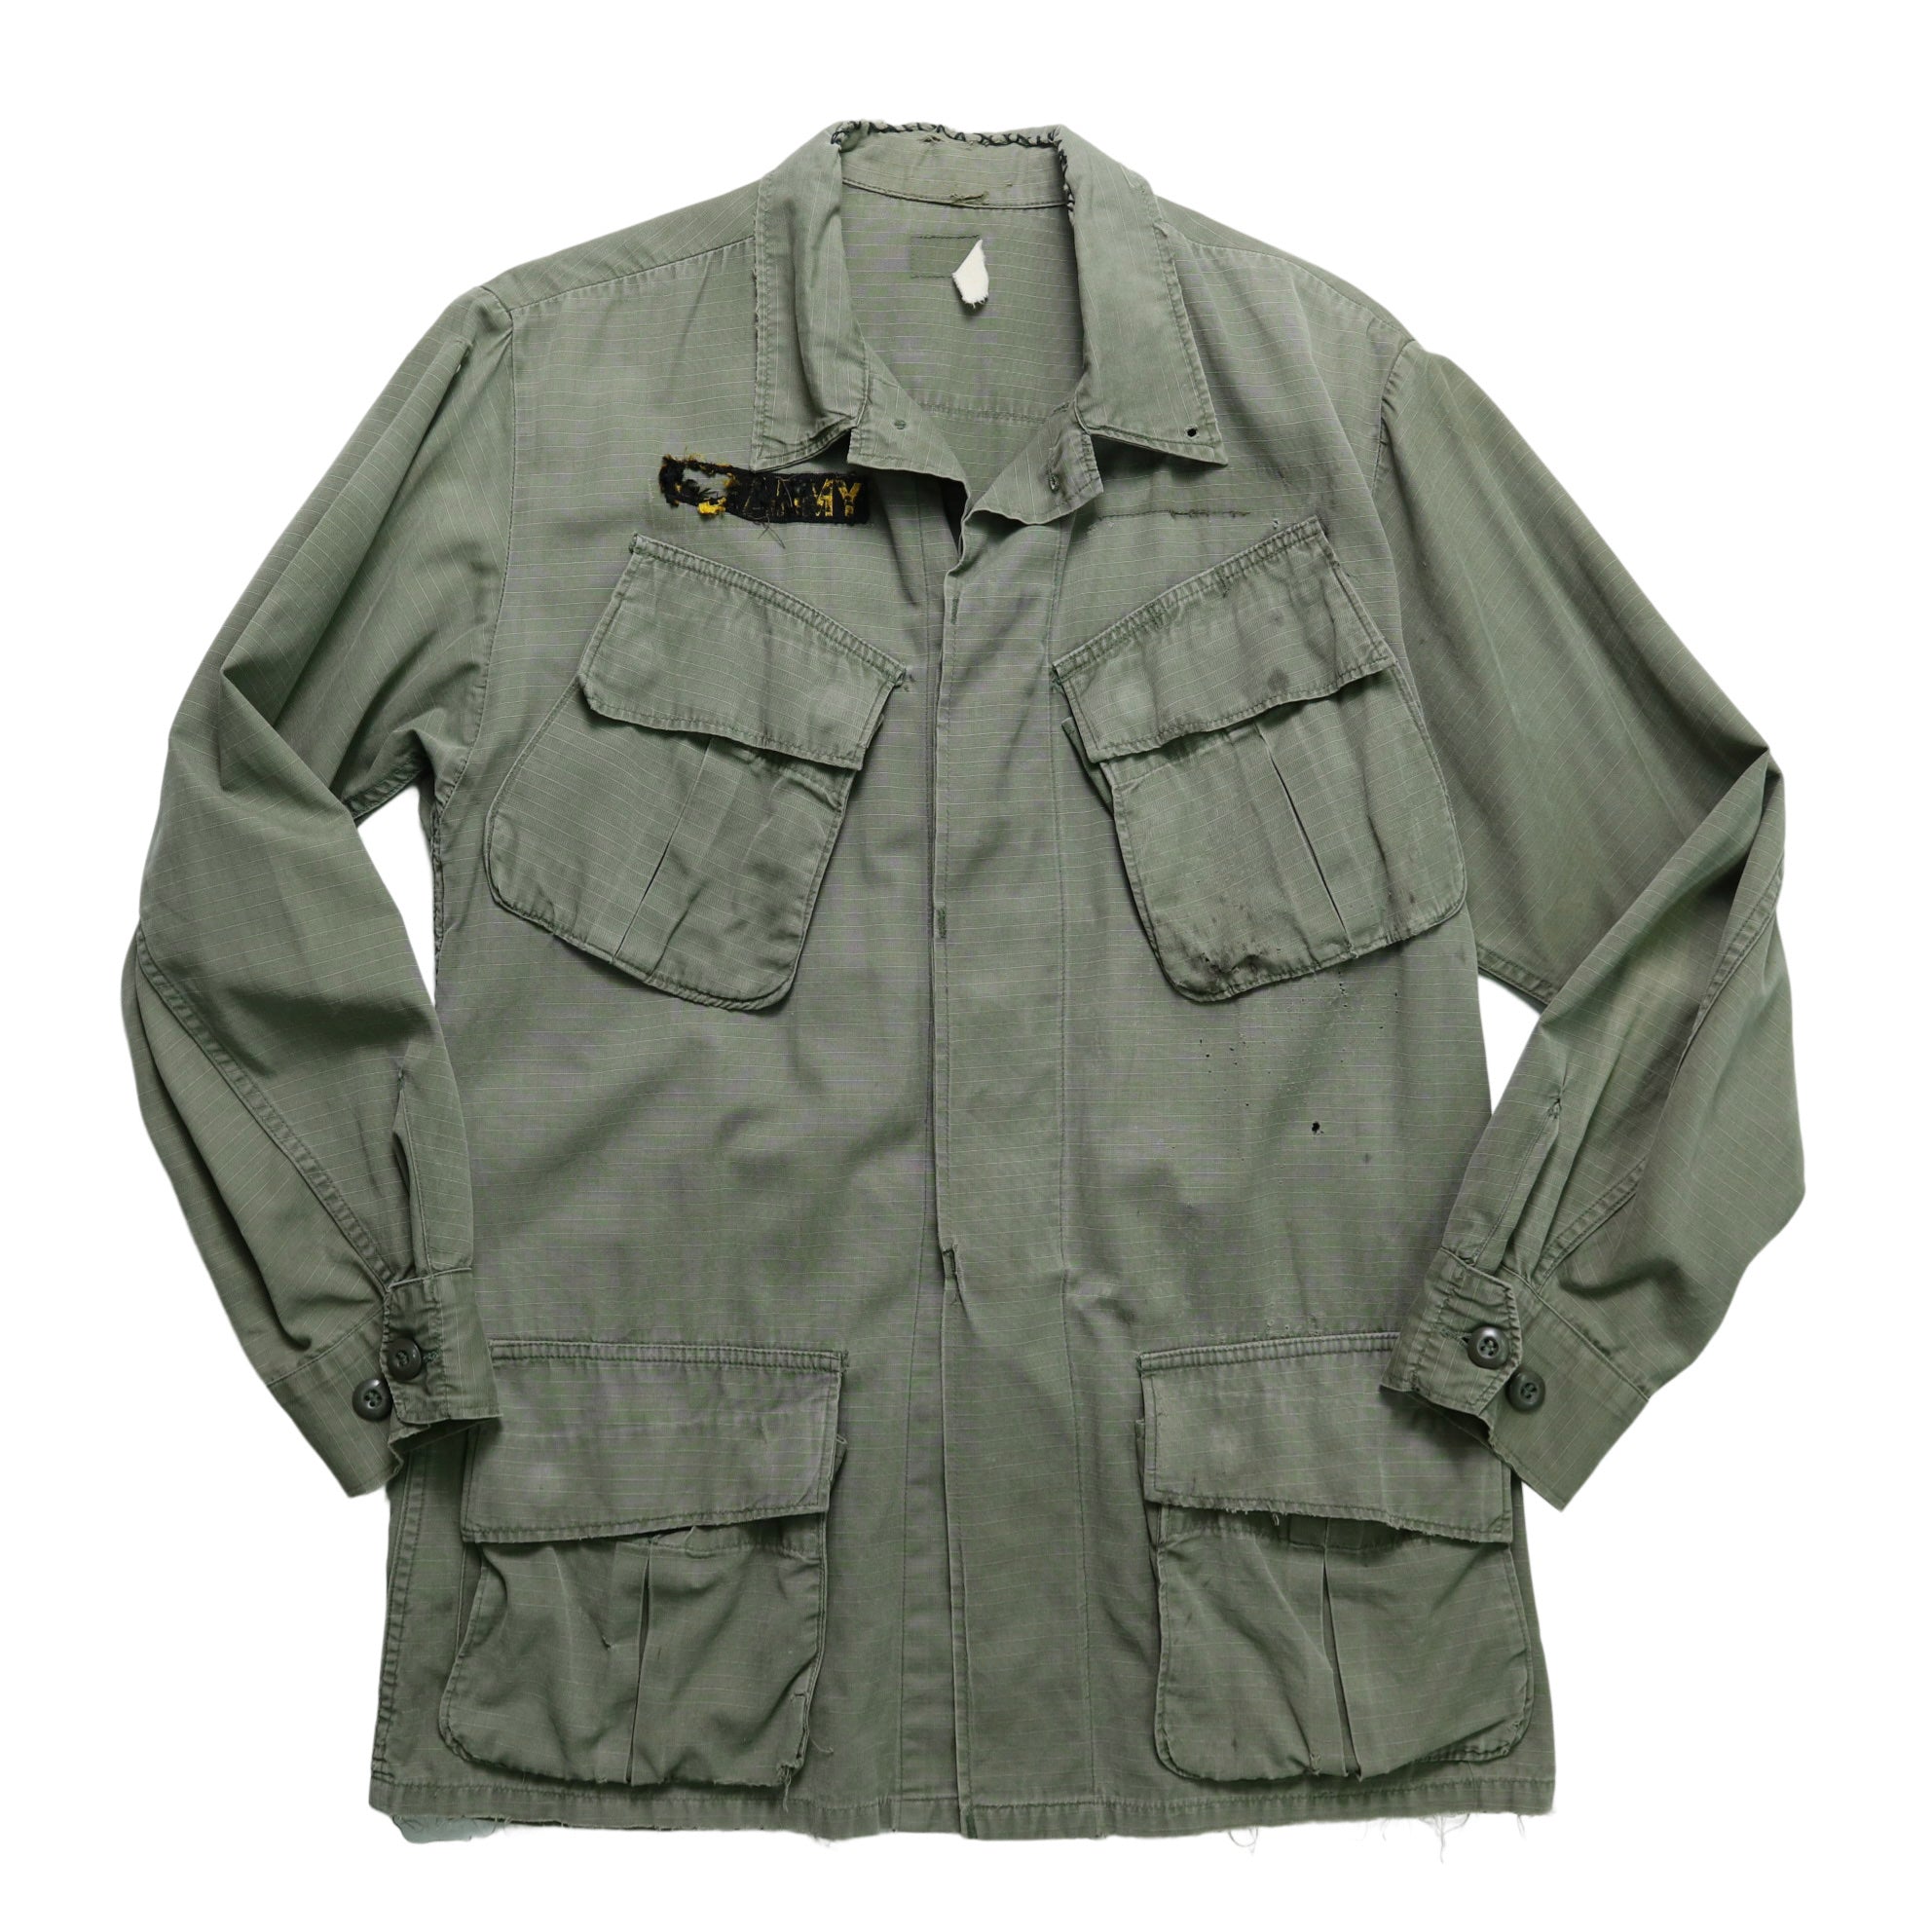 60s Us Army jungle jacket U.S. military issued Vietnam War slanted 